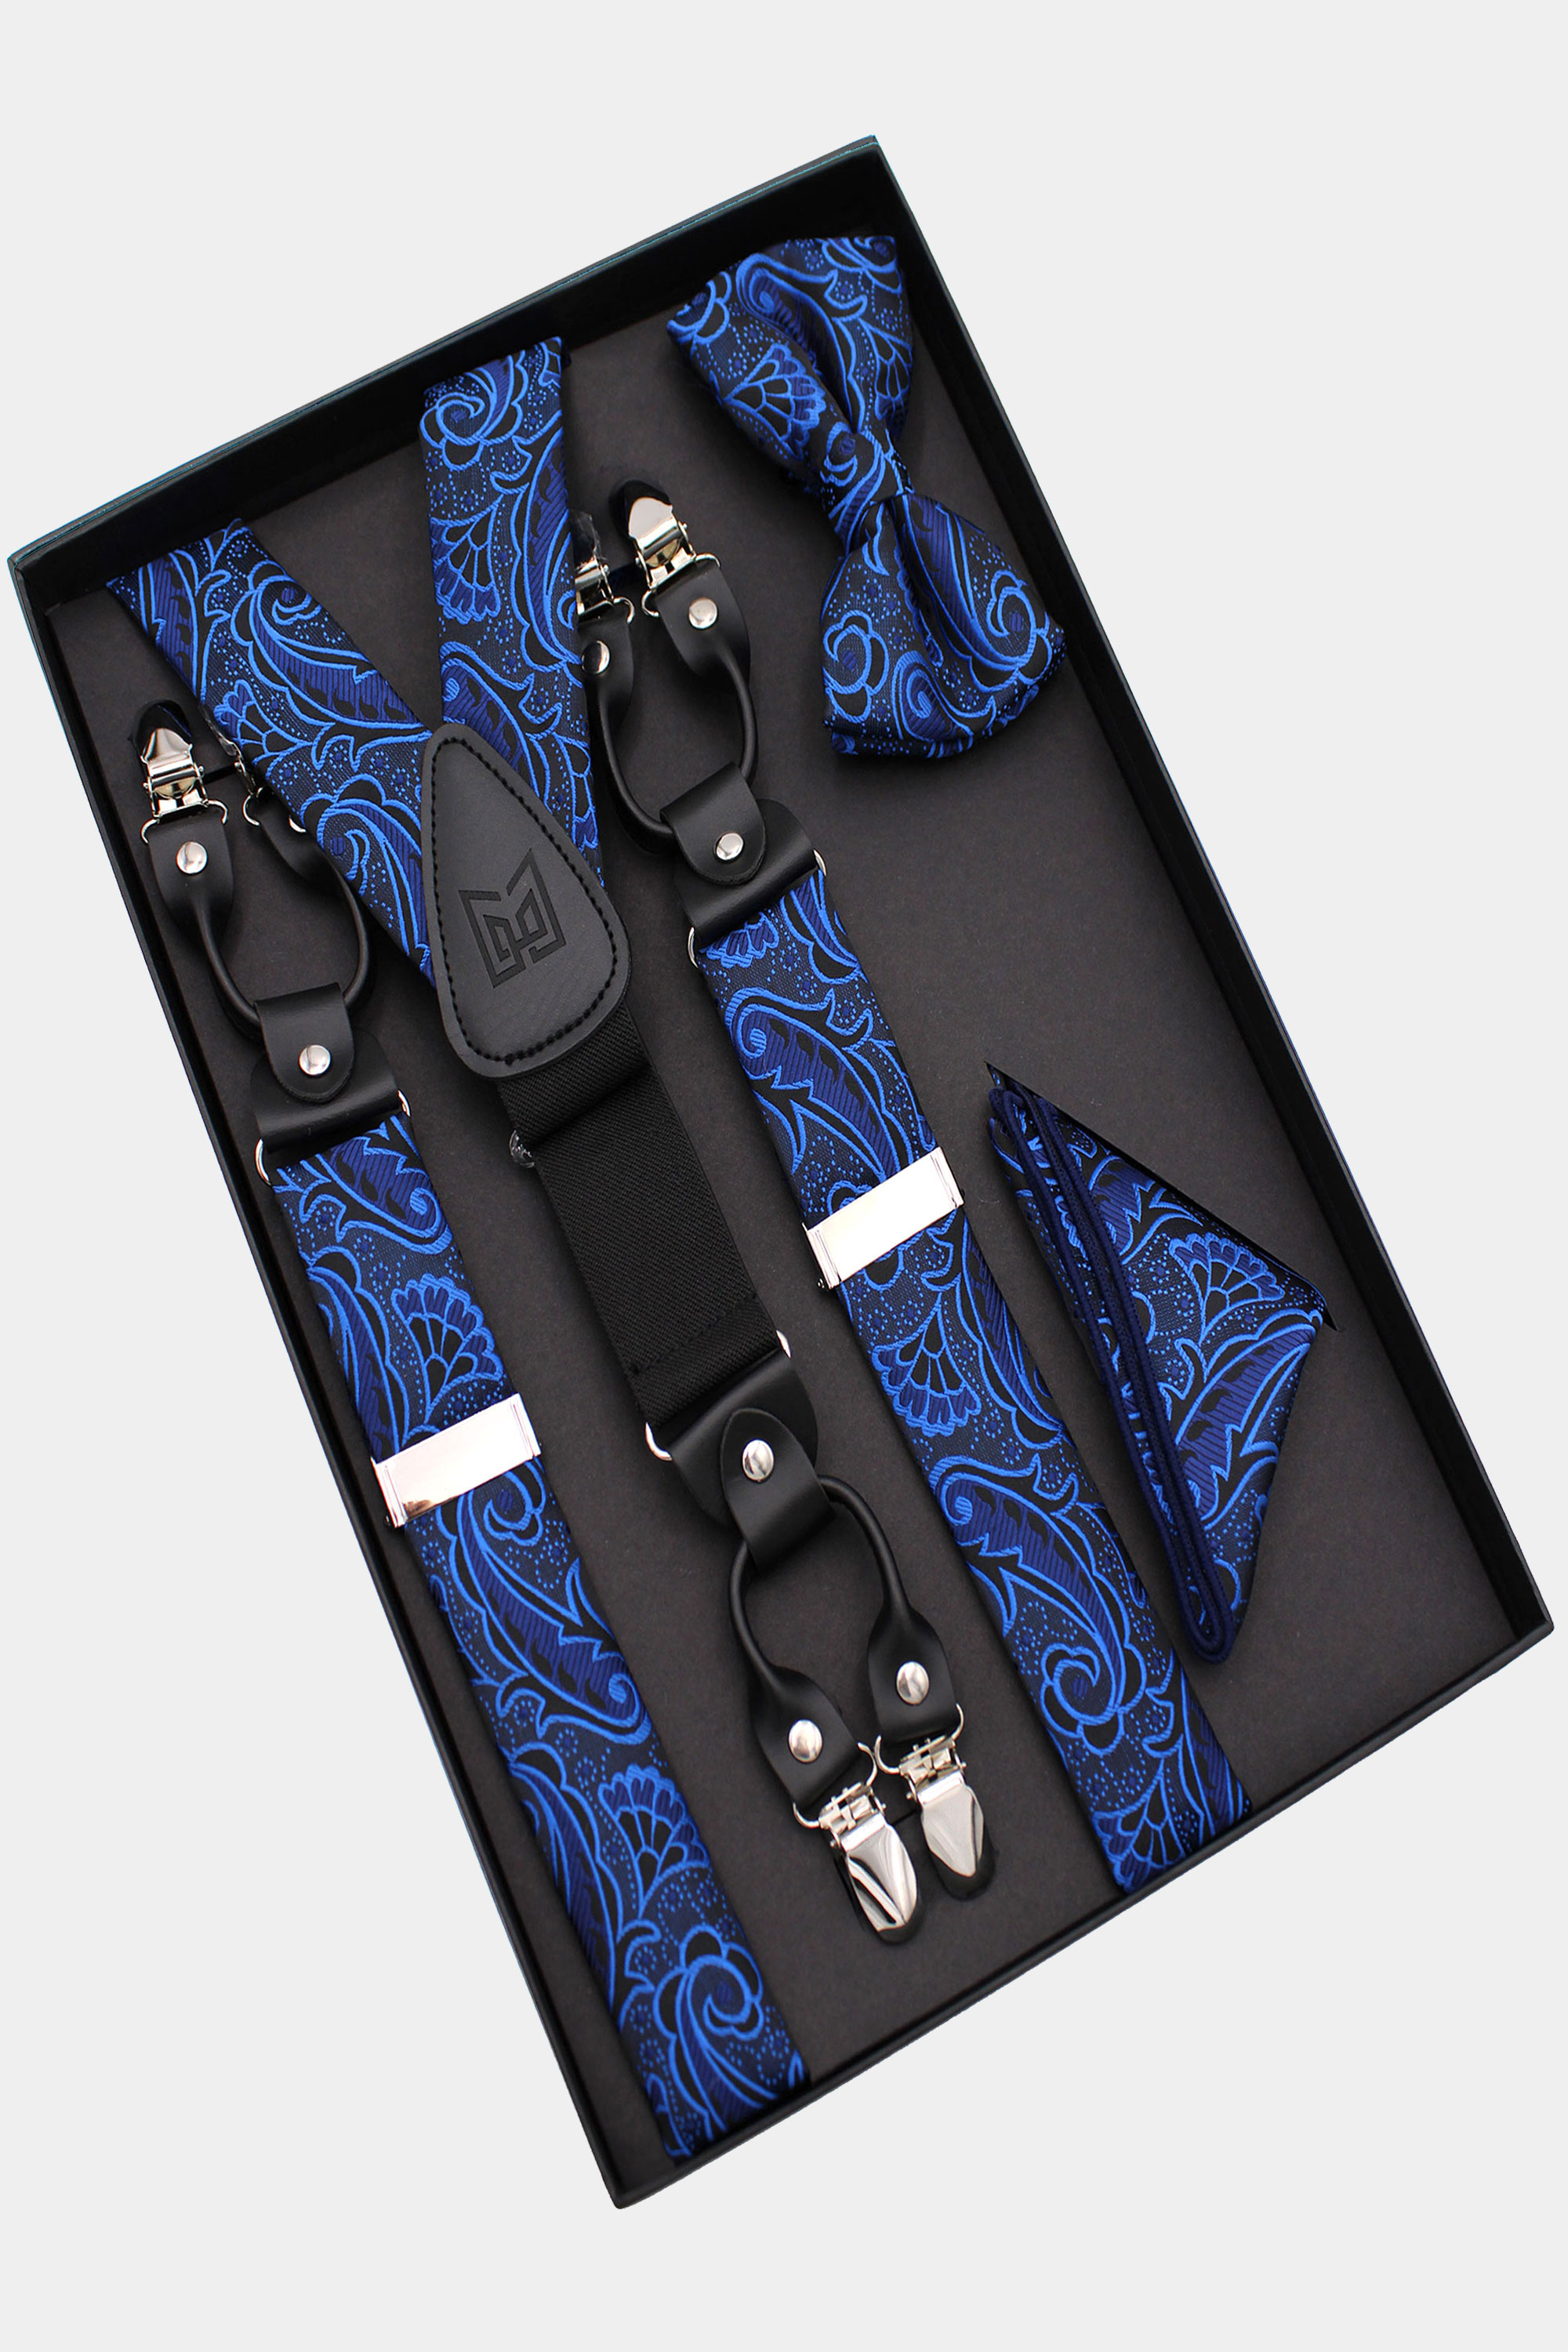 Royal Blue Suspender Gift Set, Formal Dress Suspenders, Bow Ties, Hanky,  and Cufflinks in Royal Blue